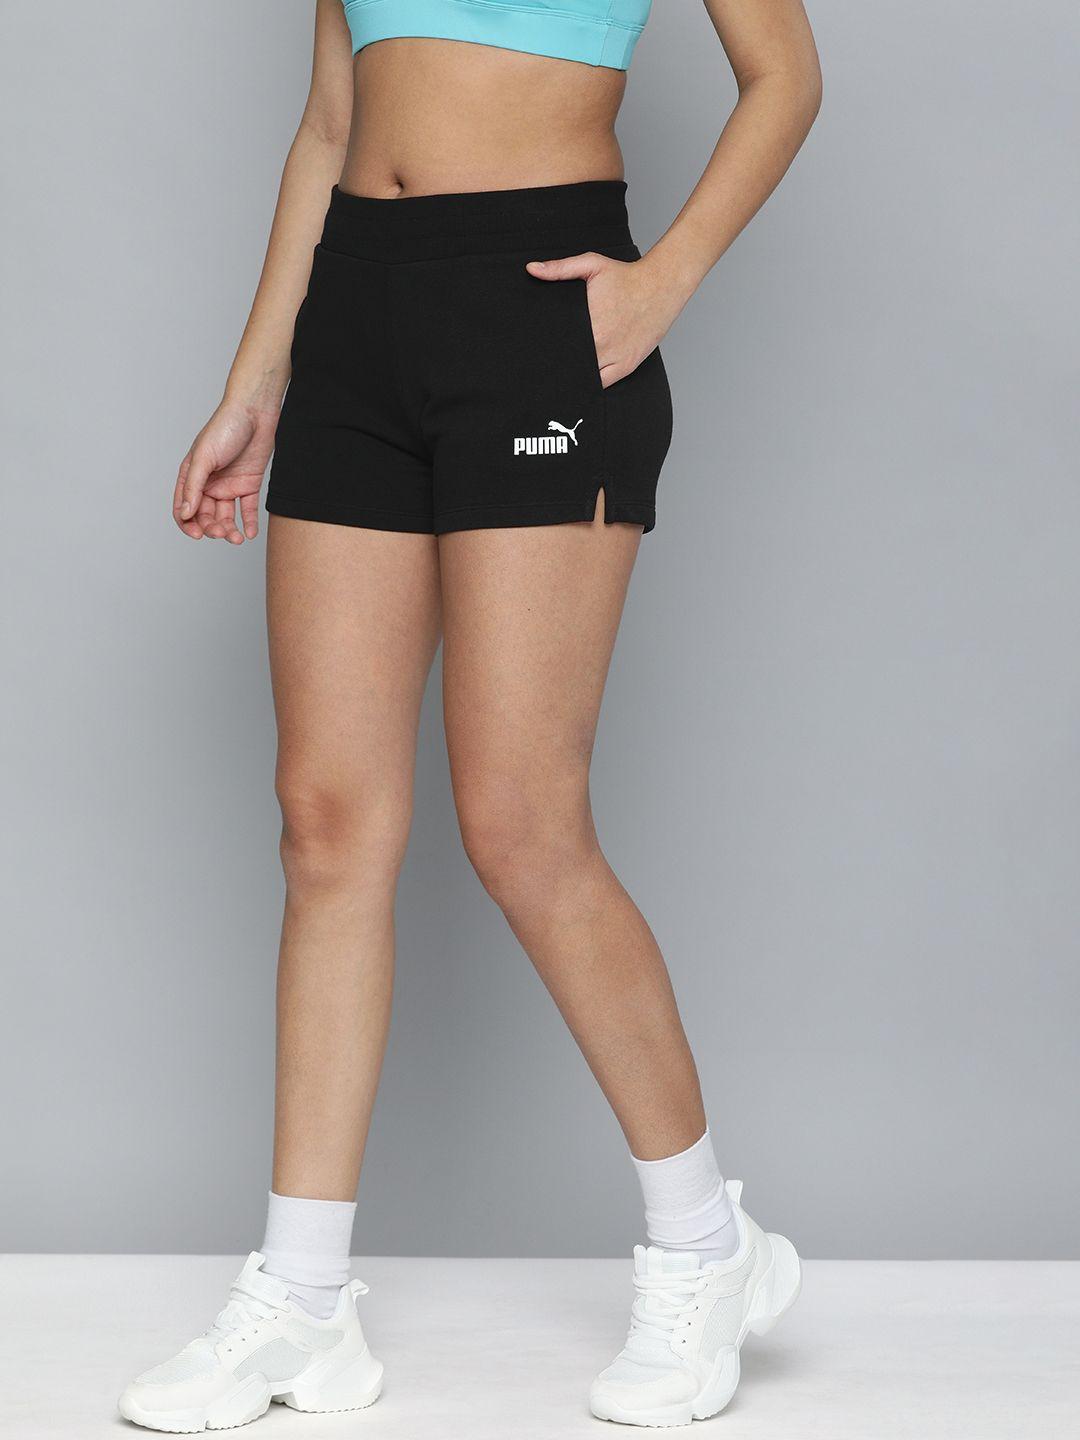 puma women black & white printed mid-rise sports shorts